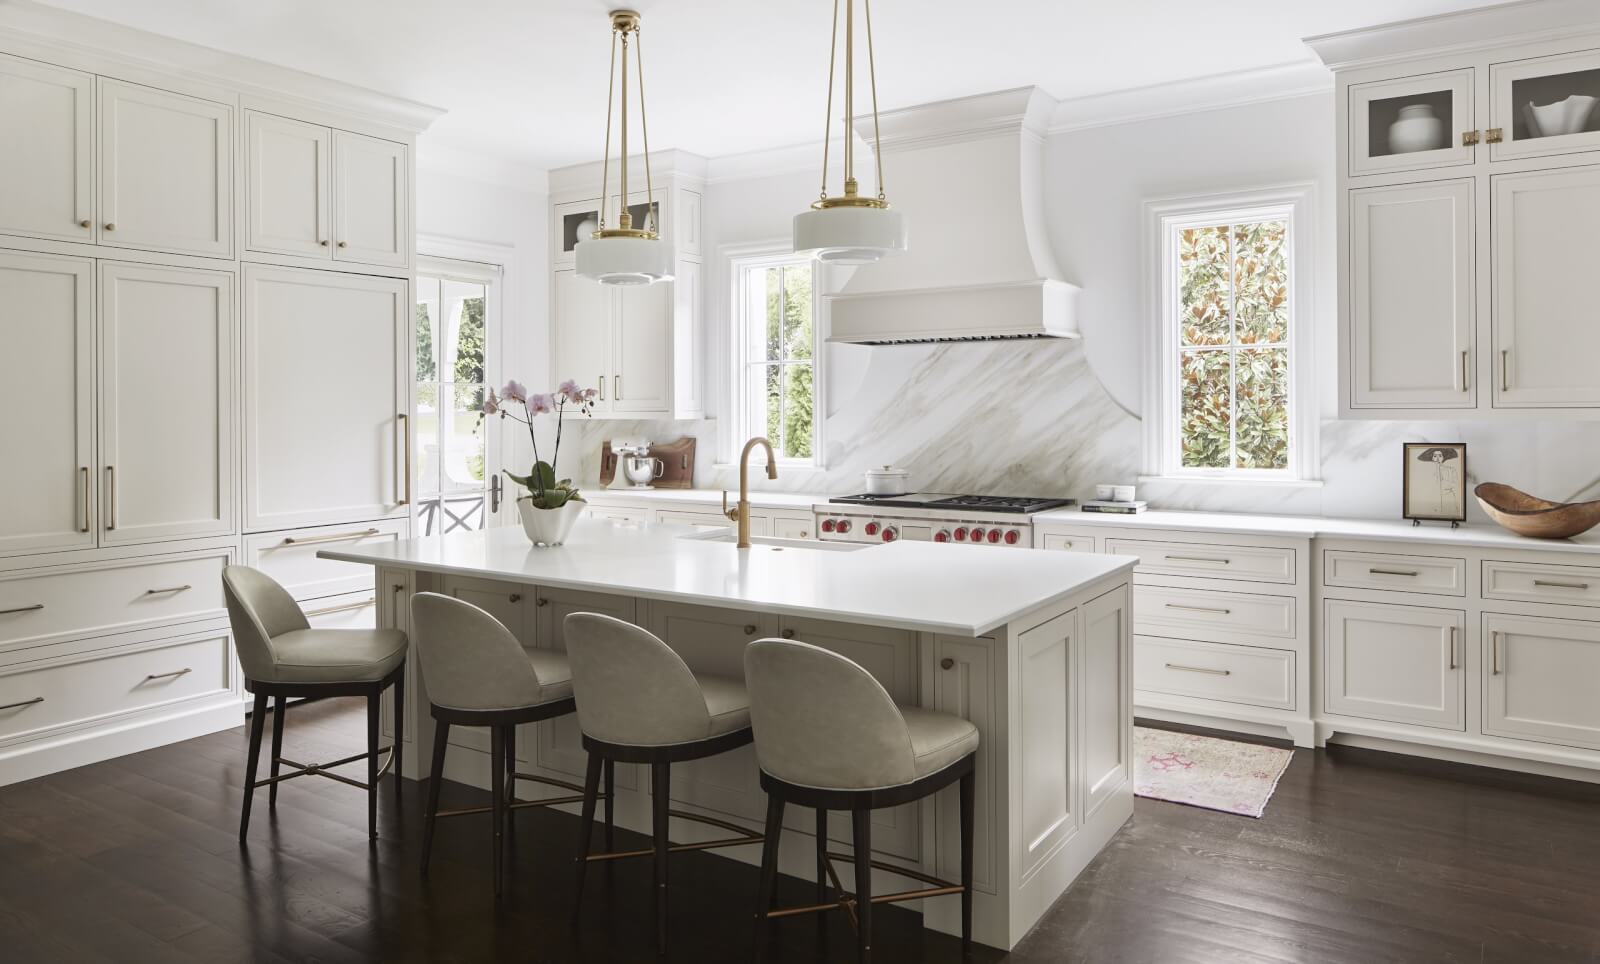 White kitchen with marble backsplash and dark wood flooring.